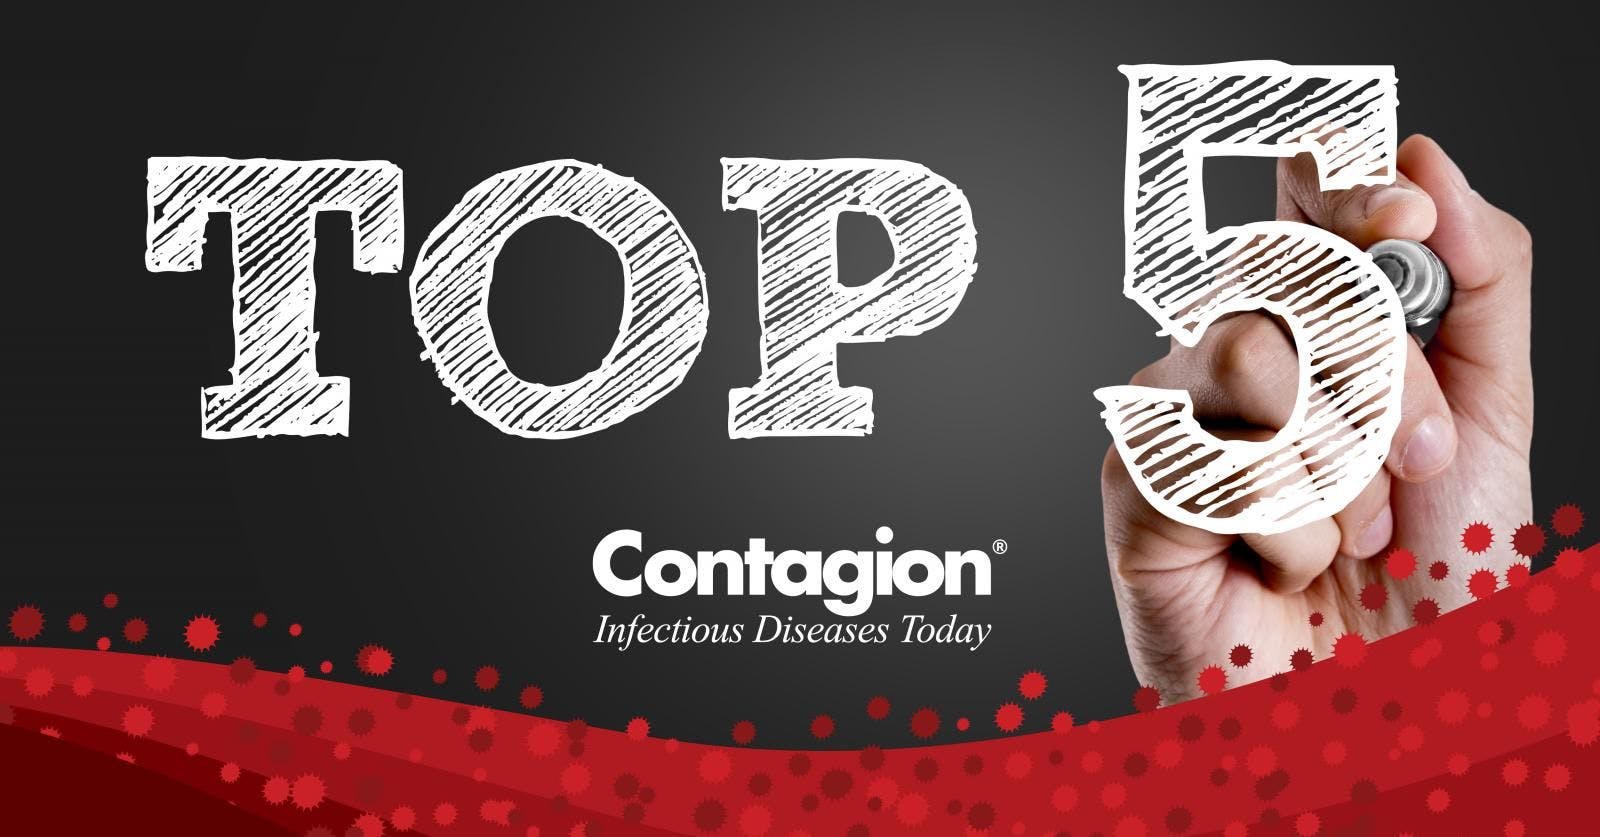 Top Infectious Disease News of the Week&mdash;June 2, 2019